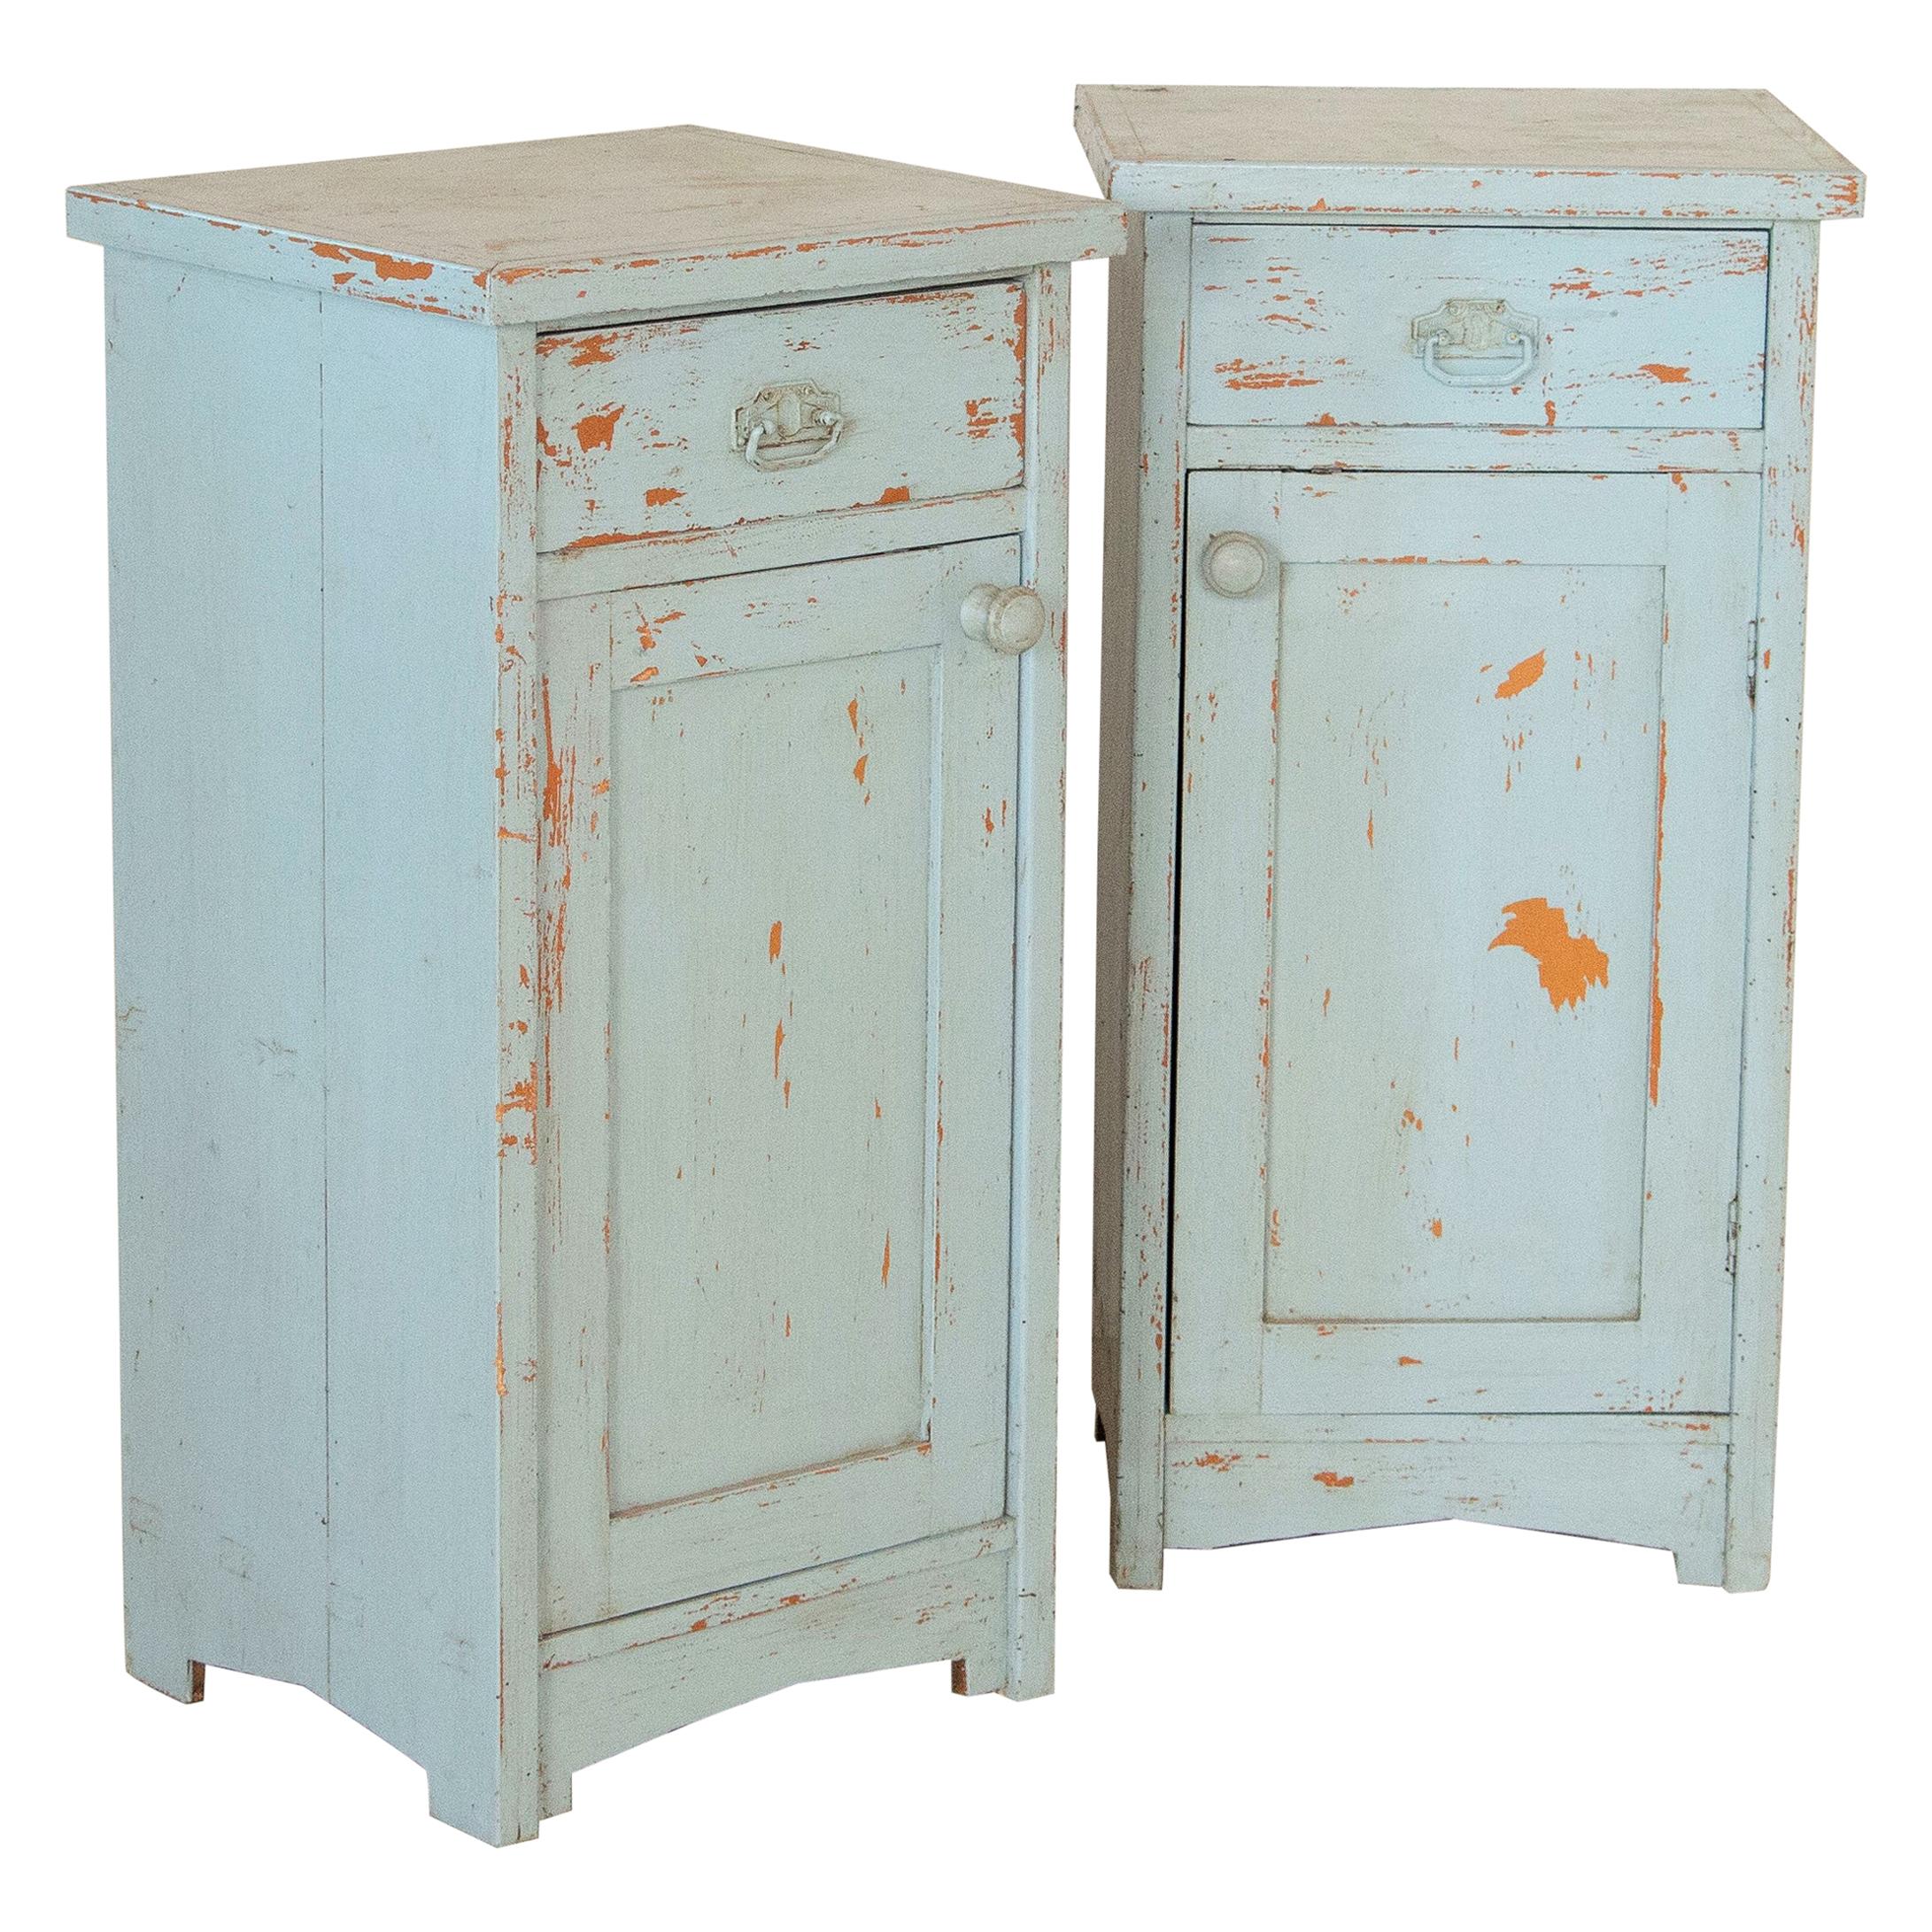 Pair of Antique Nightstands, Original Blue Paint